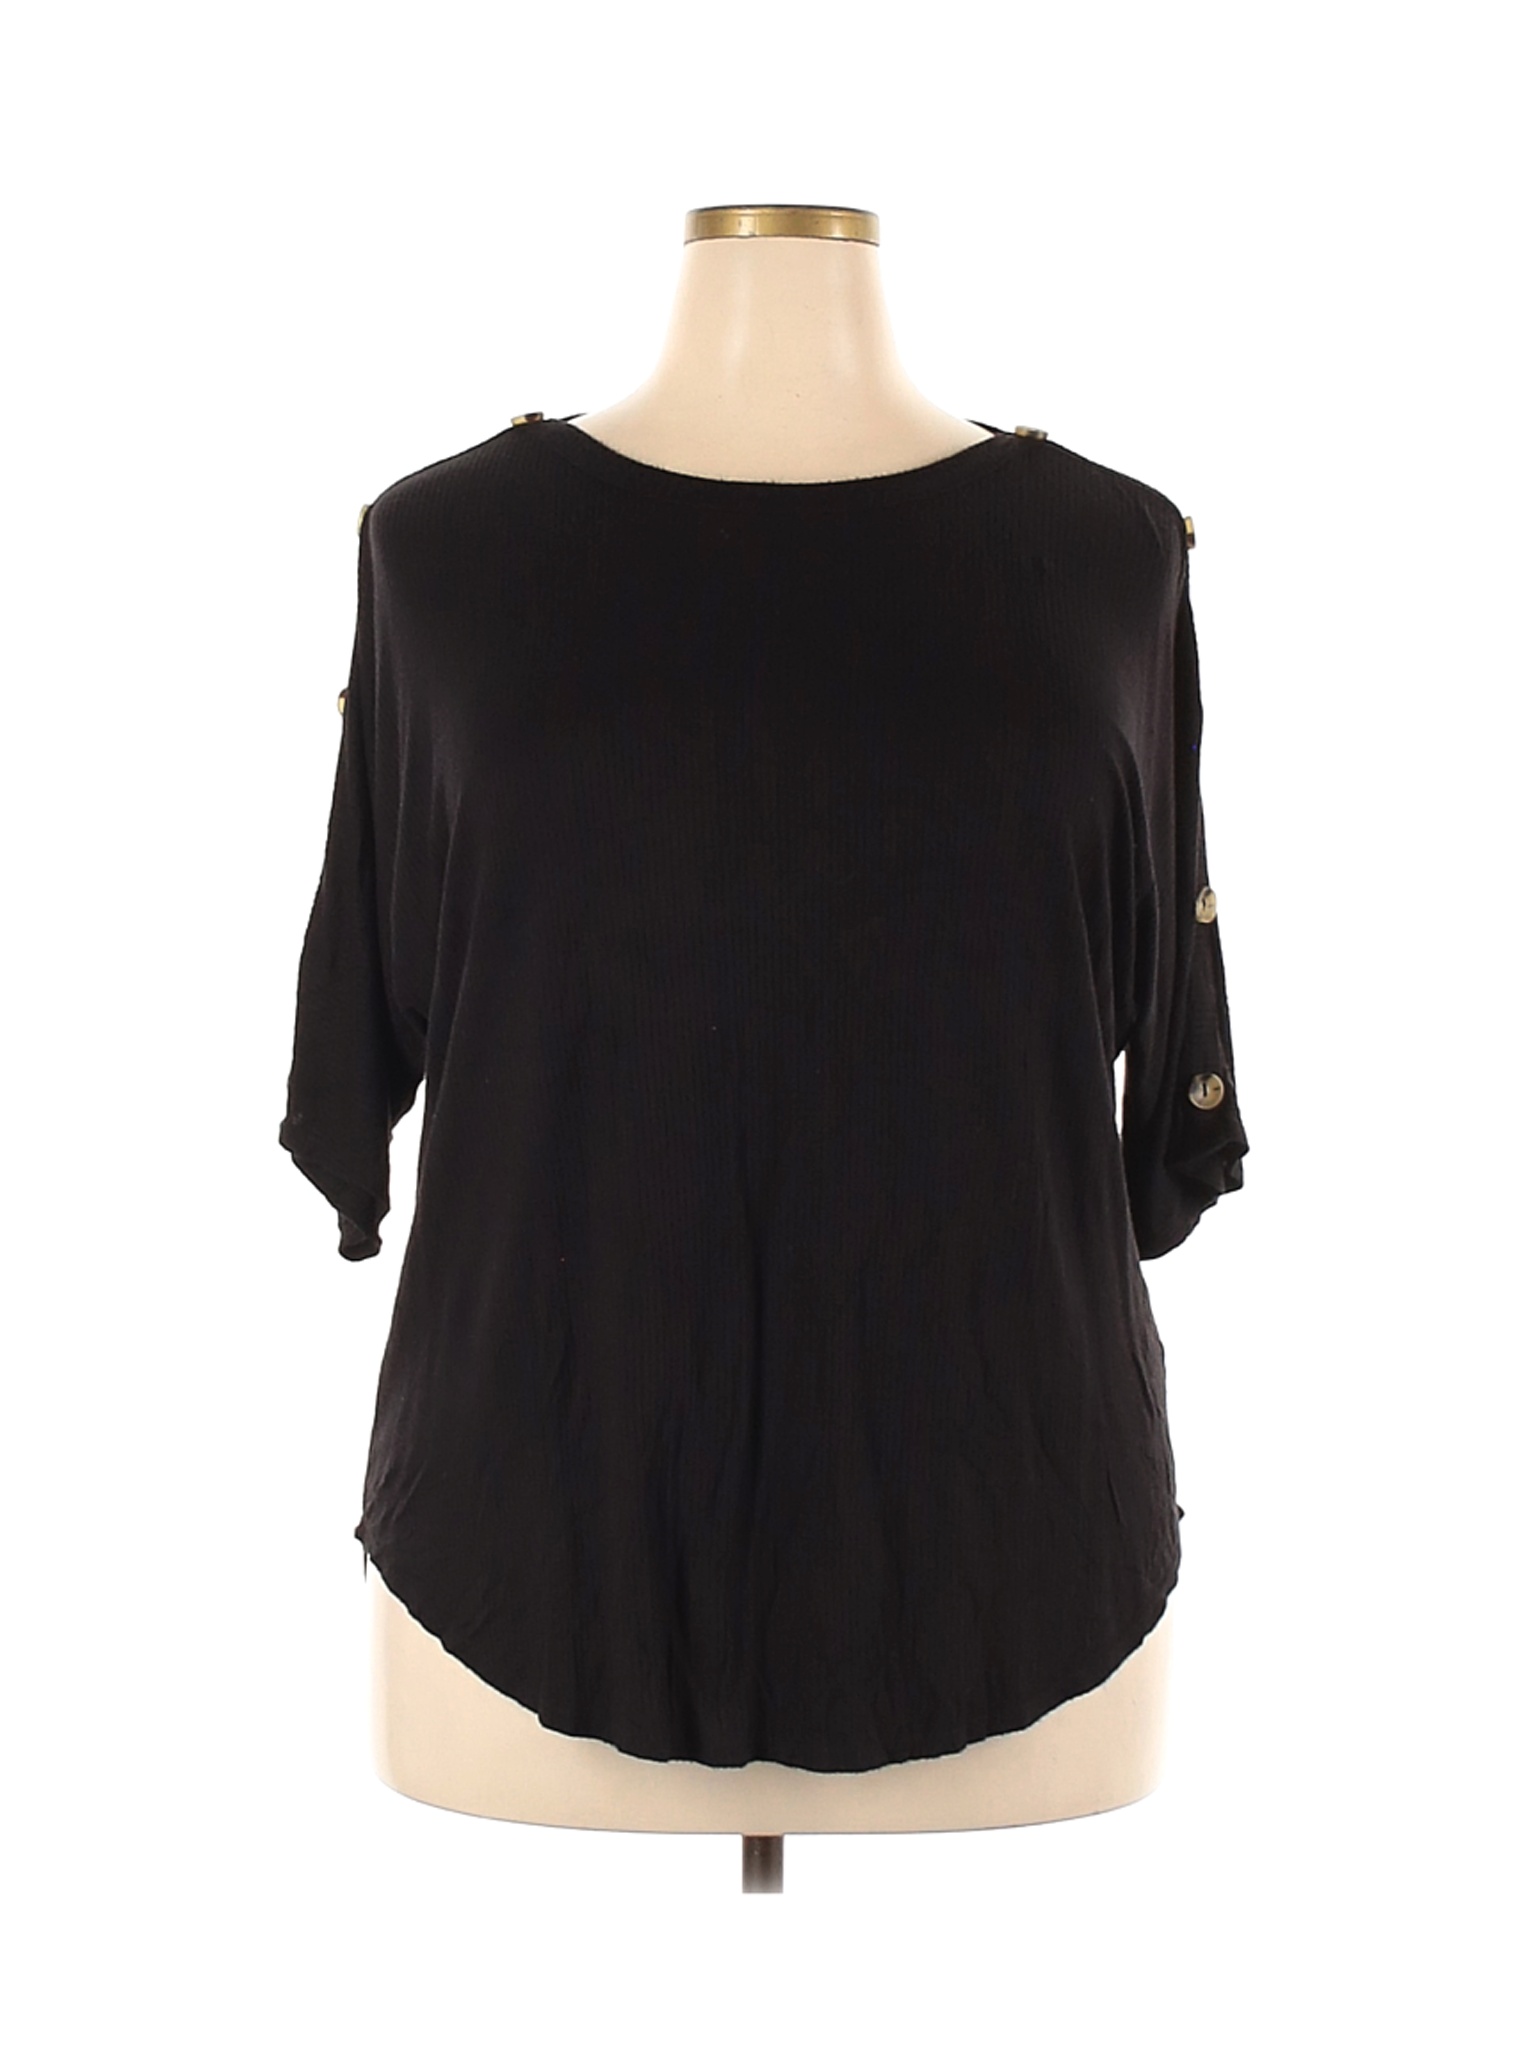 Kim & Cami Women Black Short Sleeve Top 2X Plus | eBay